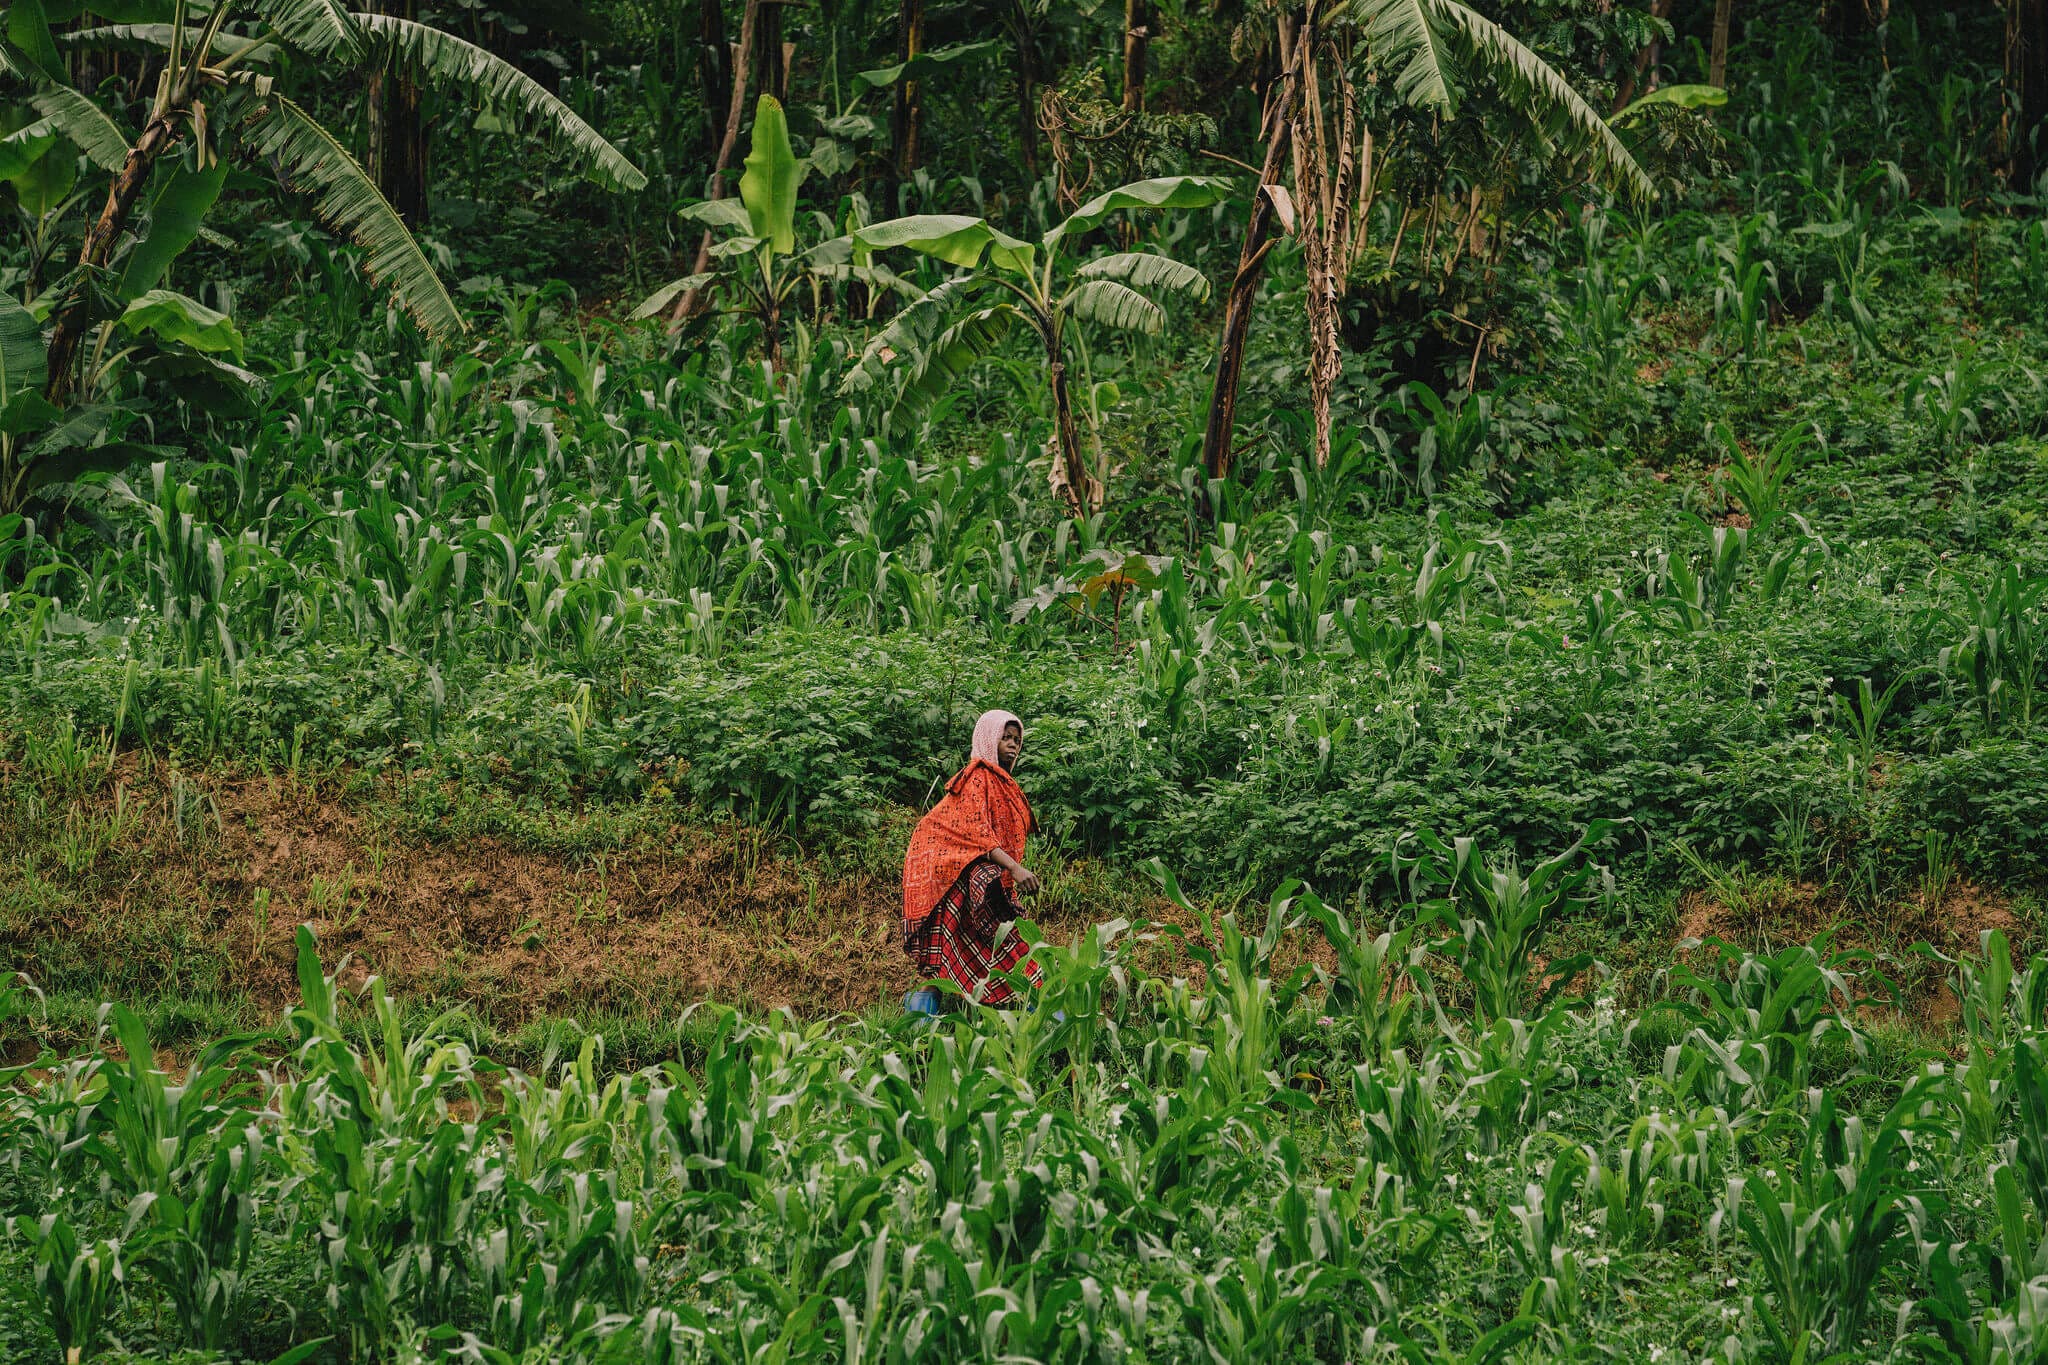 A Rwandan woman walking through fields